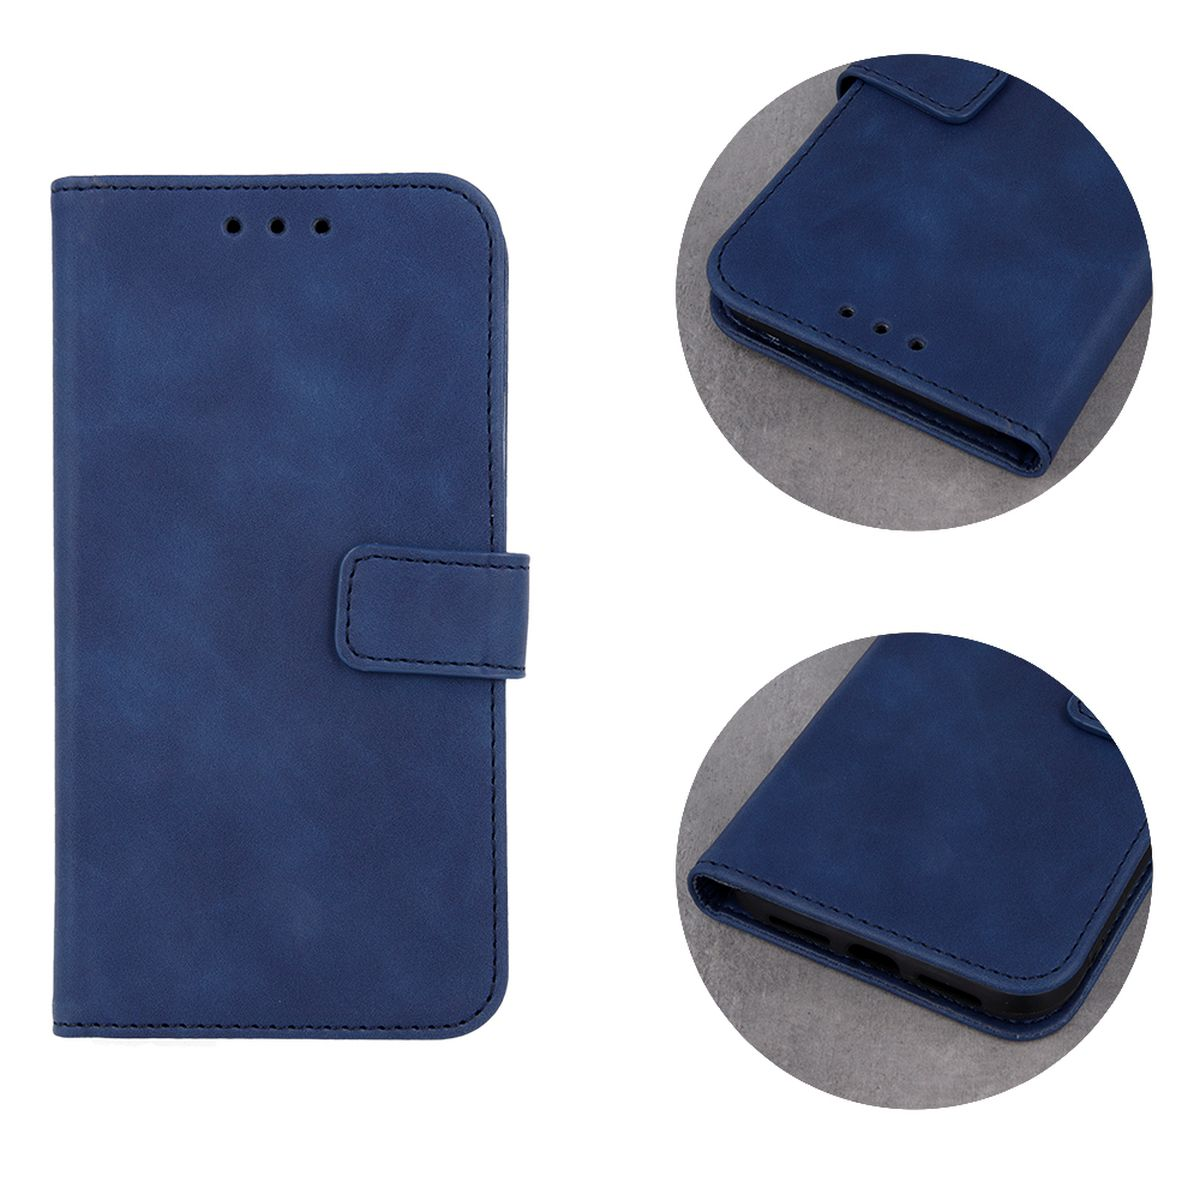 Samsung, Blau A21s, COFI Smart Bookcover, Galaxy Velvet,